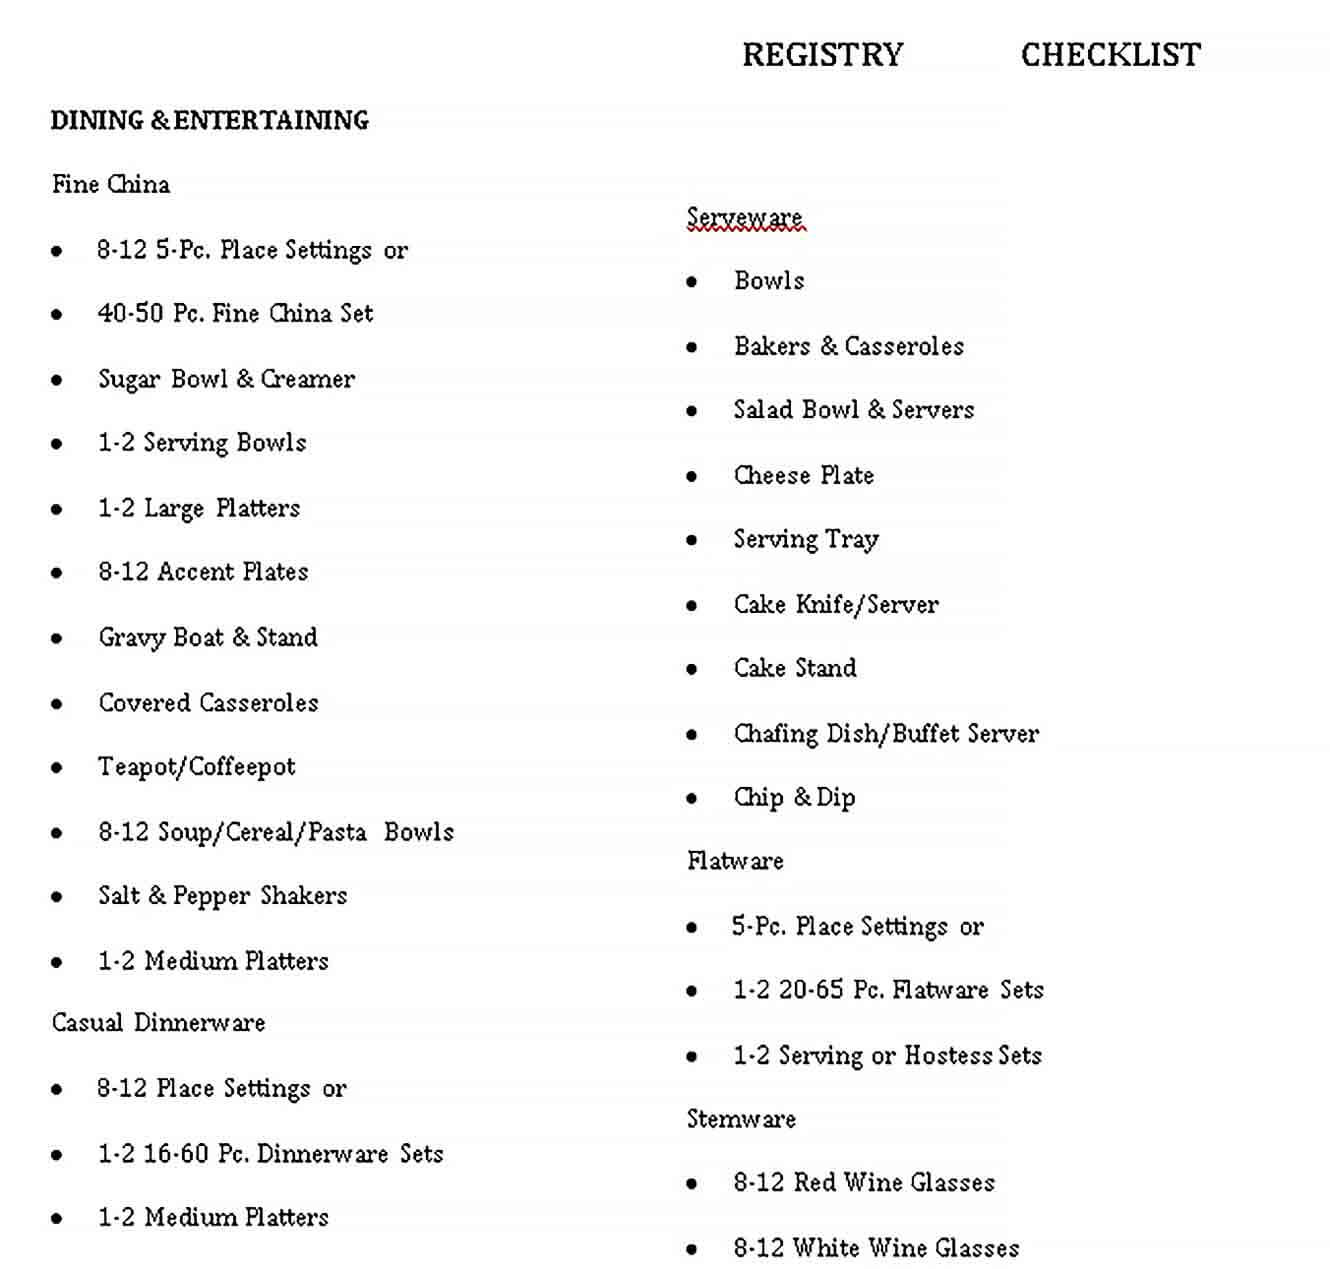 Sample Wedding Registry Checklist